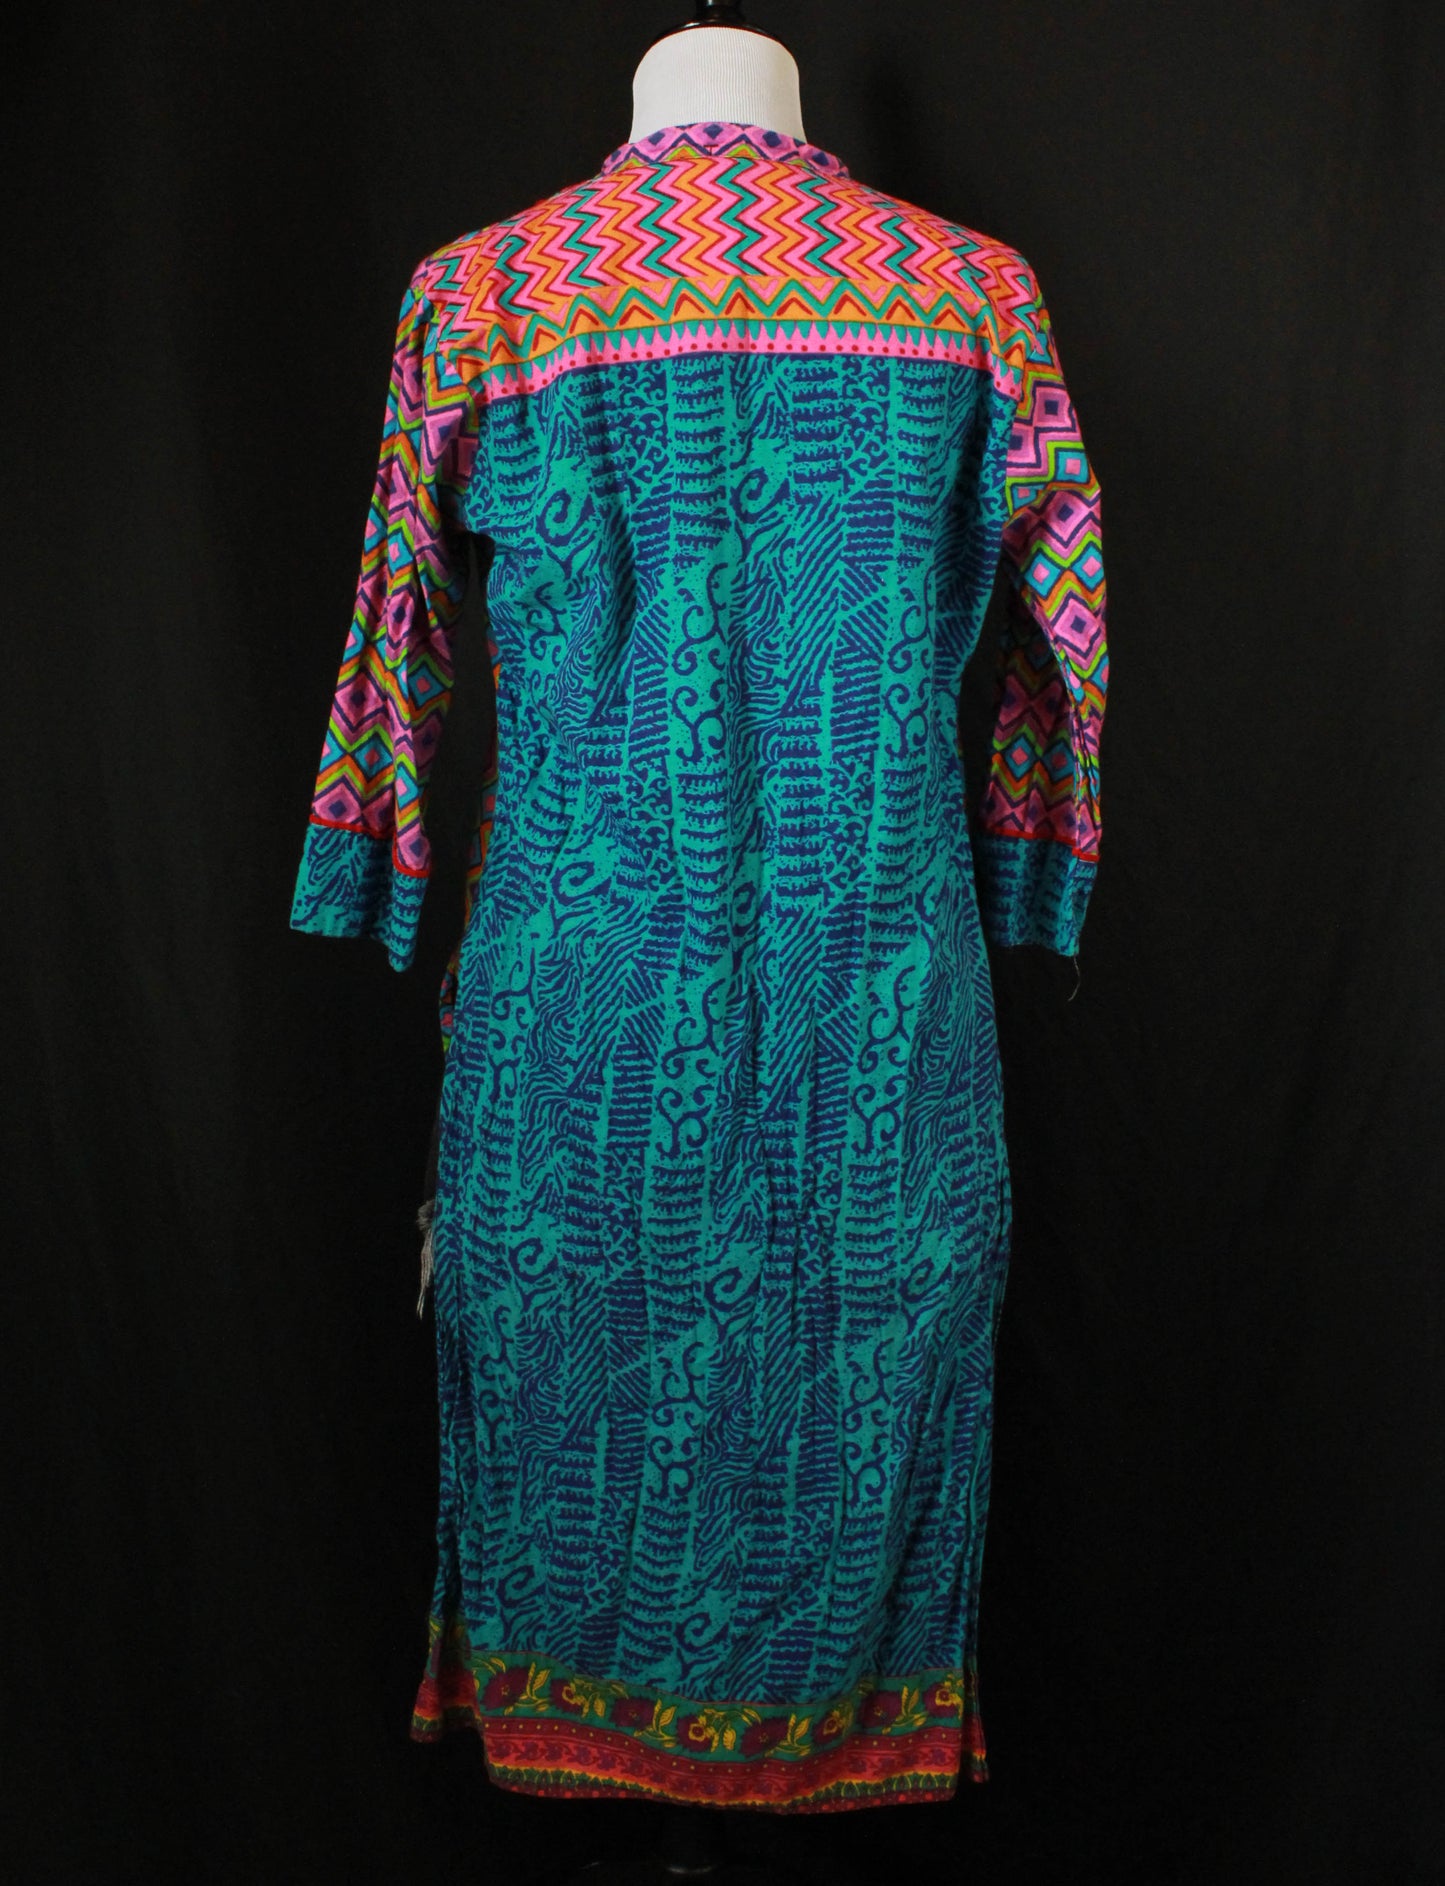 Women's Vintage Multicolored Hippie Cotton Kaftan Tunic - Small/Medium